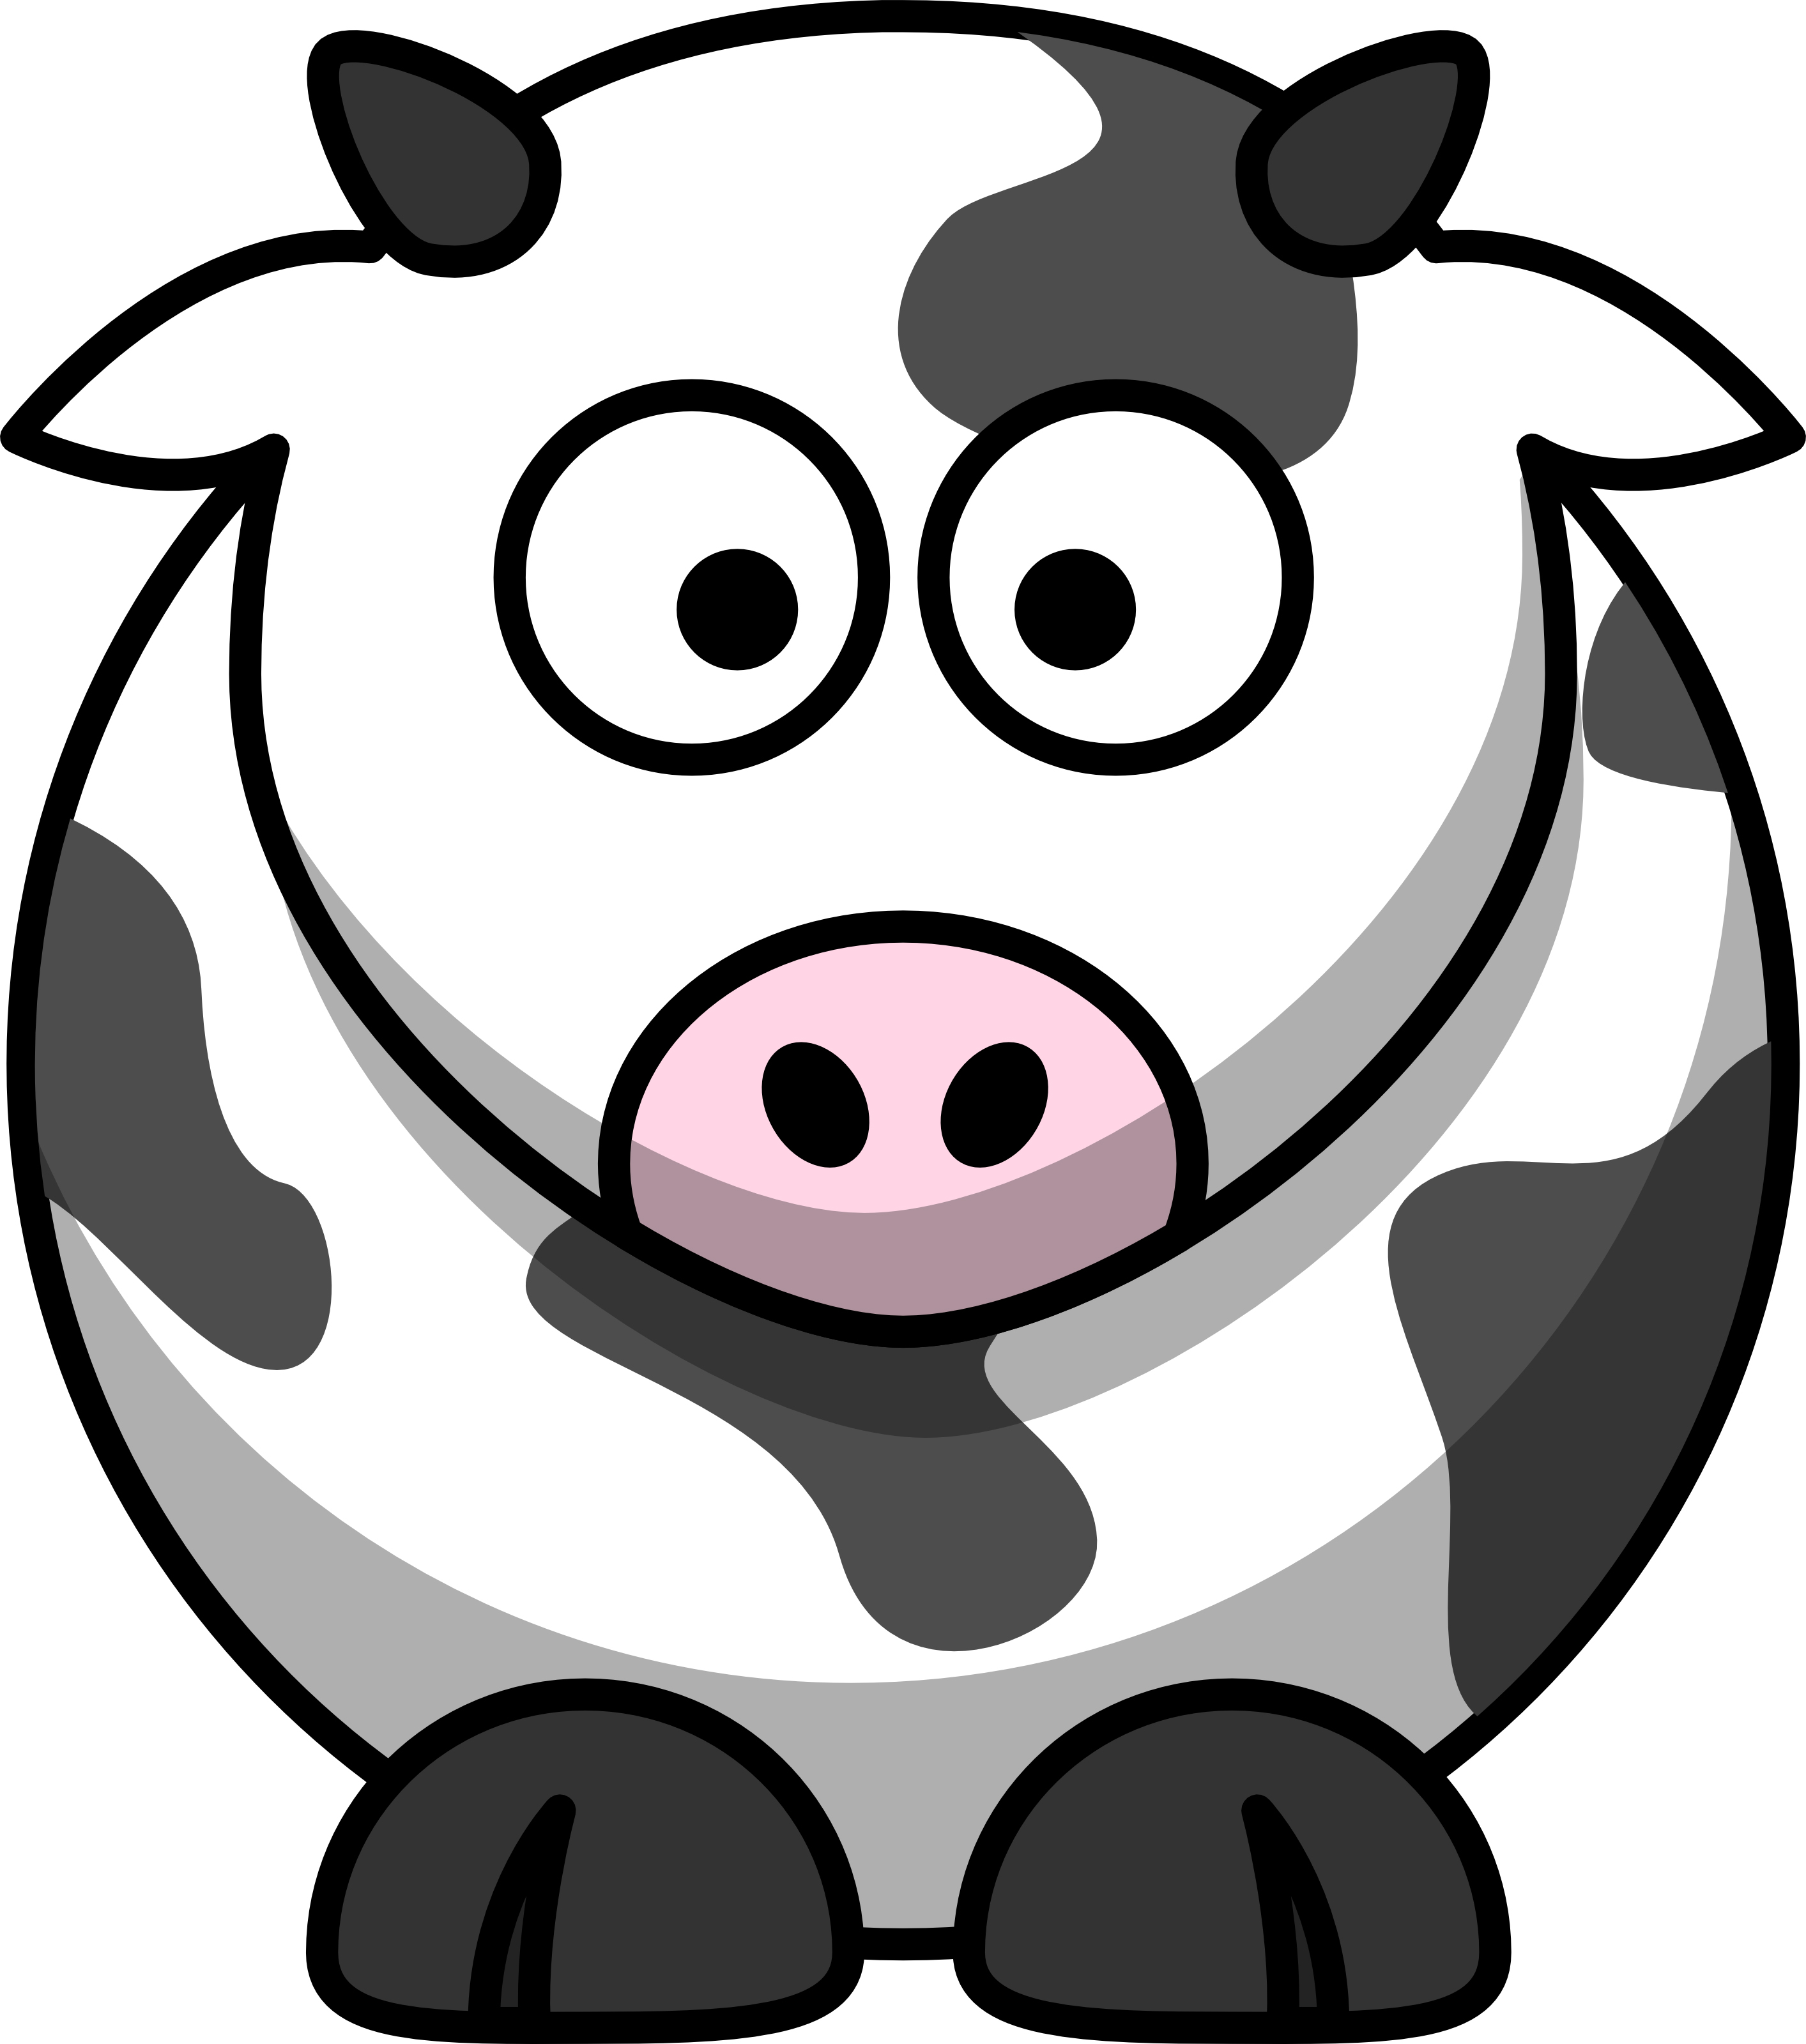 Free Cartoon Cow Clip Art image - vector clip art online, royalty